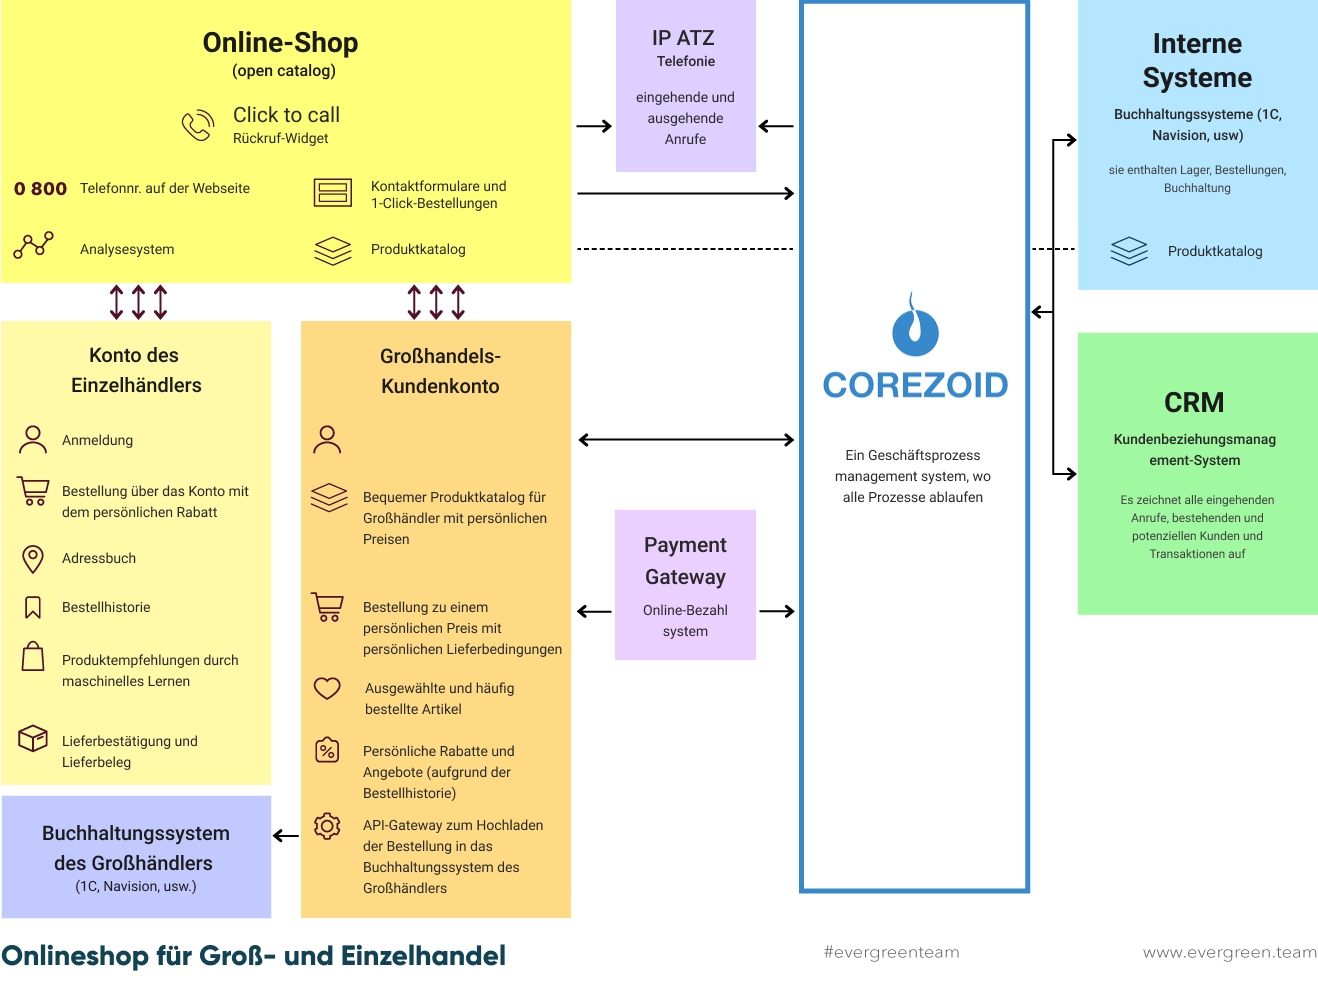 E-commerce integration Corezoid